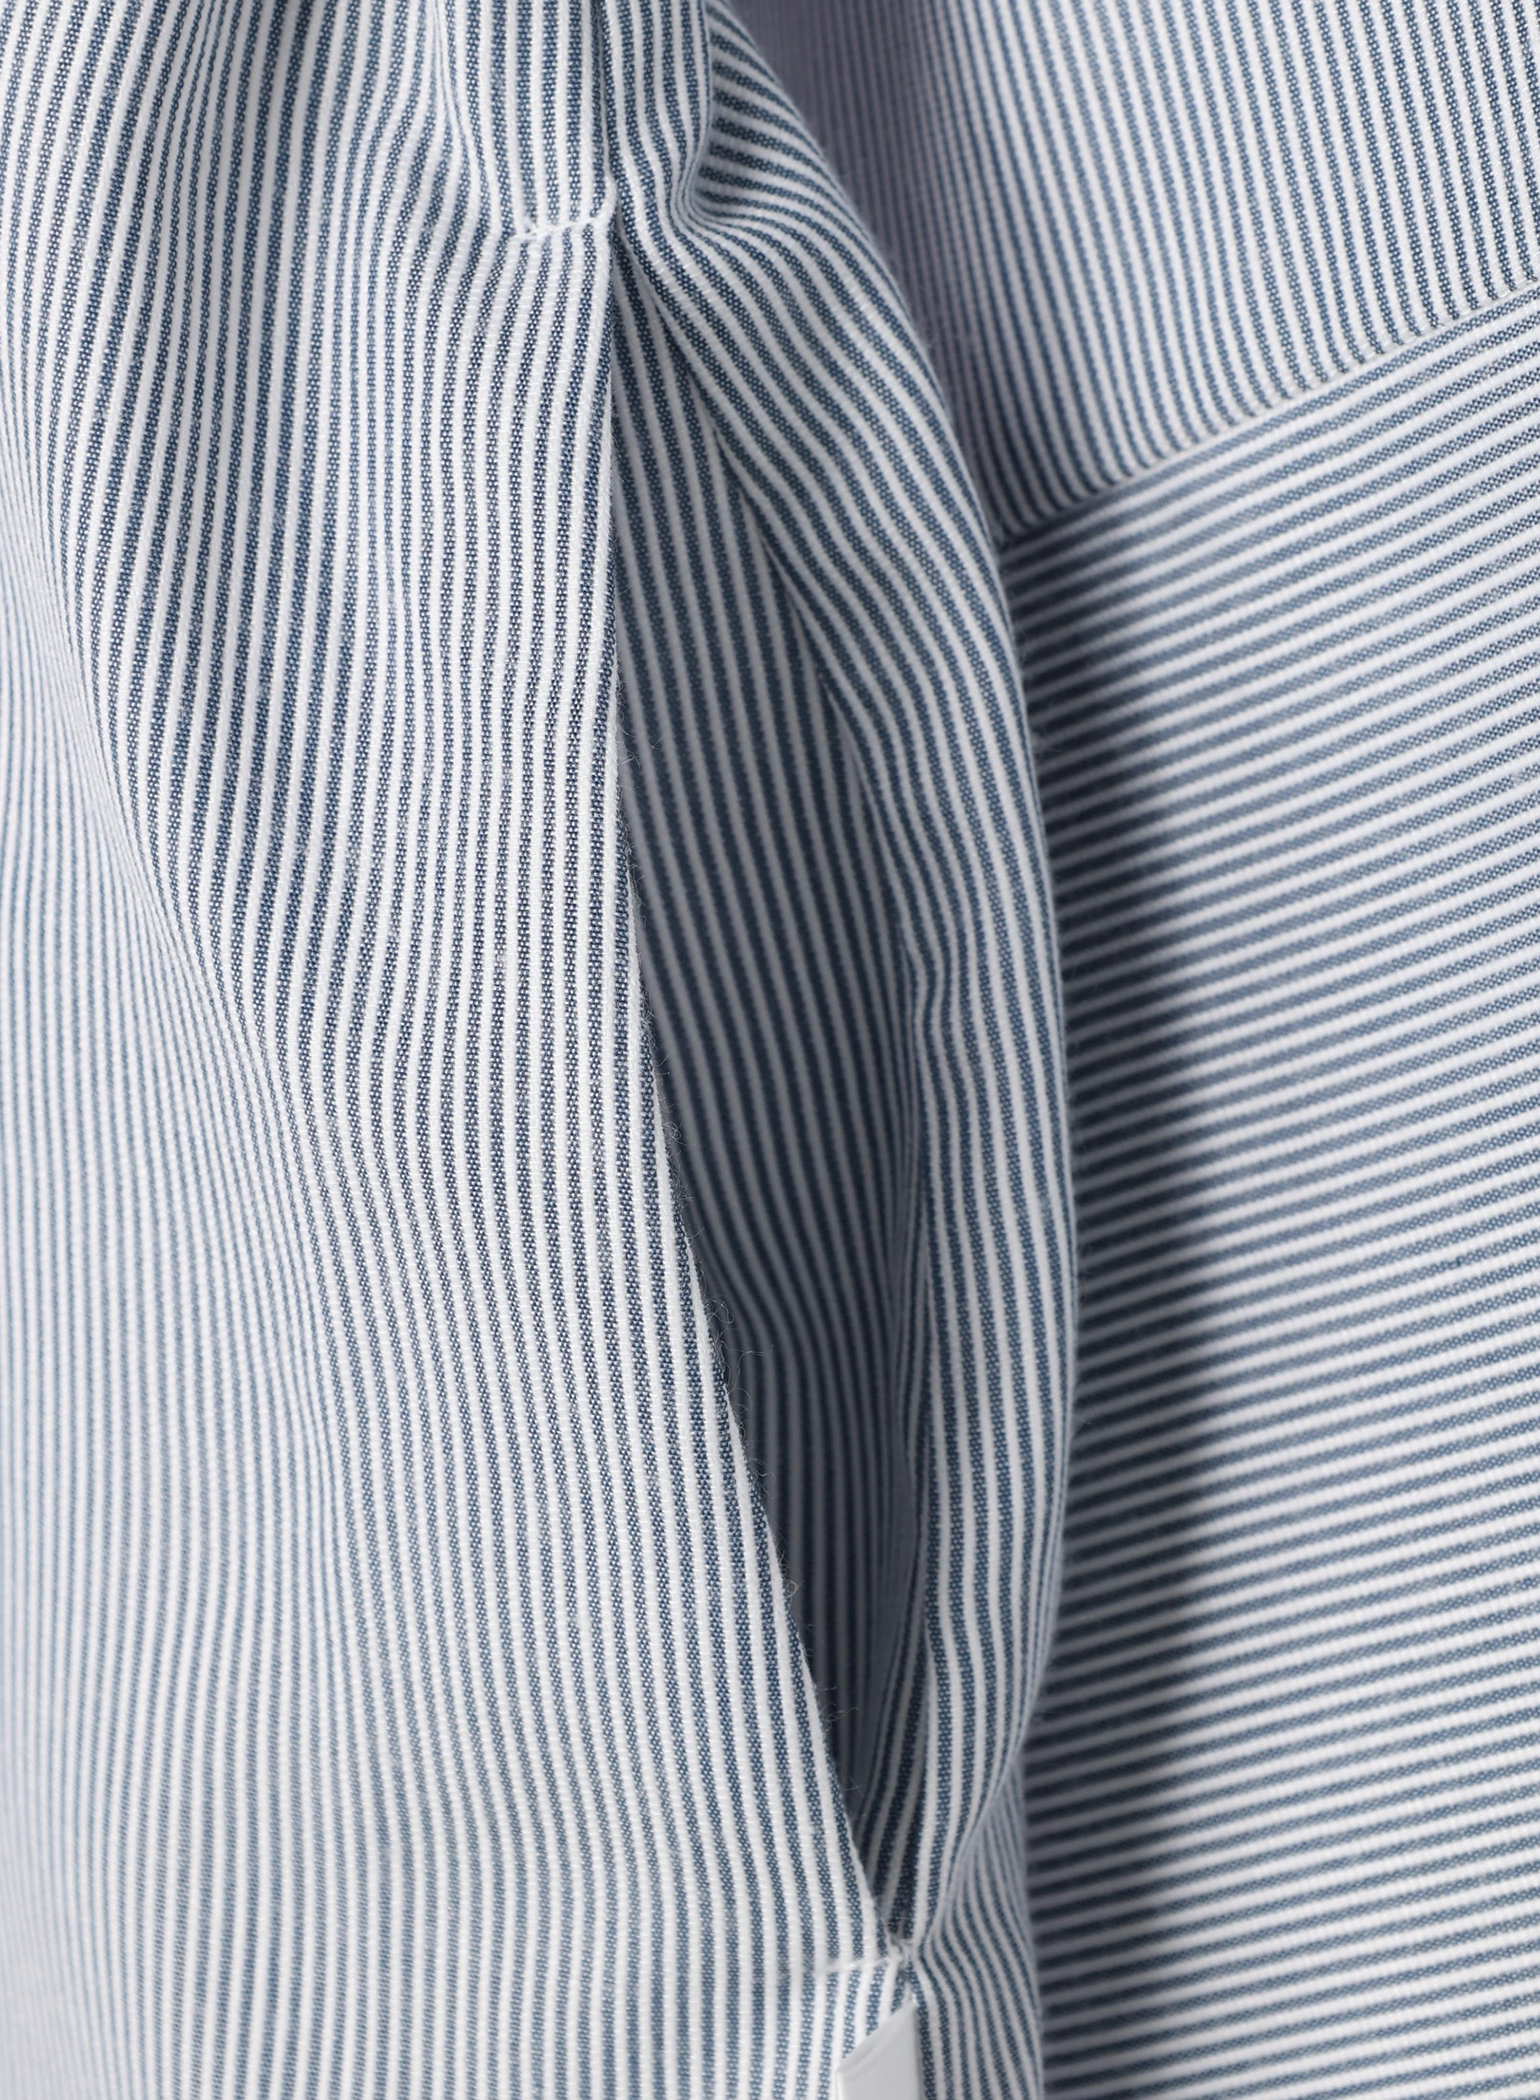 DENHAM(デンハム) |THIN STRIPE SHIRTS DRESS